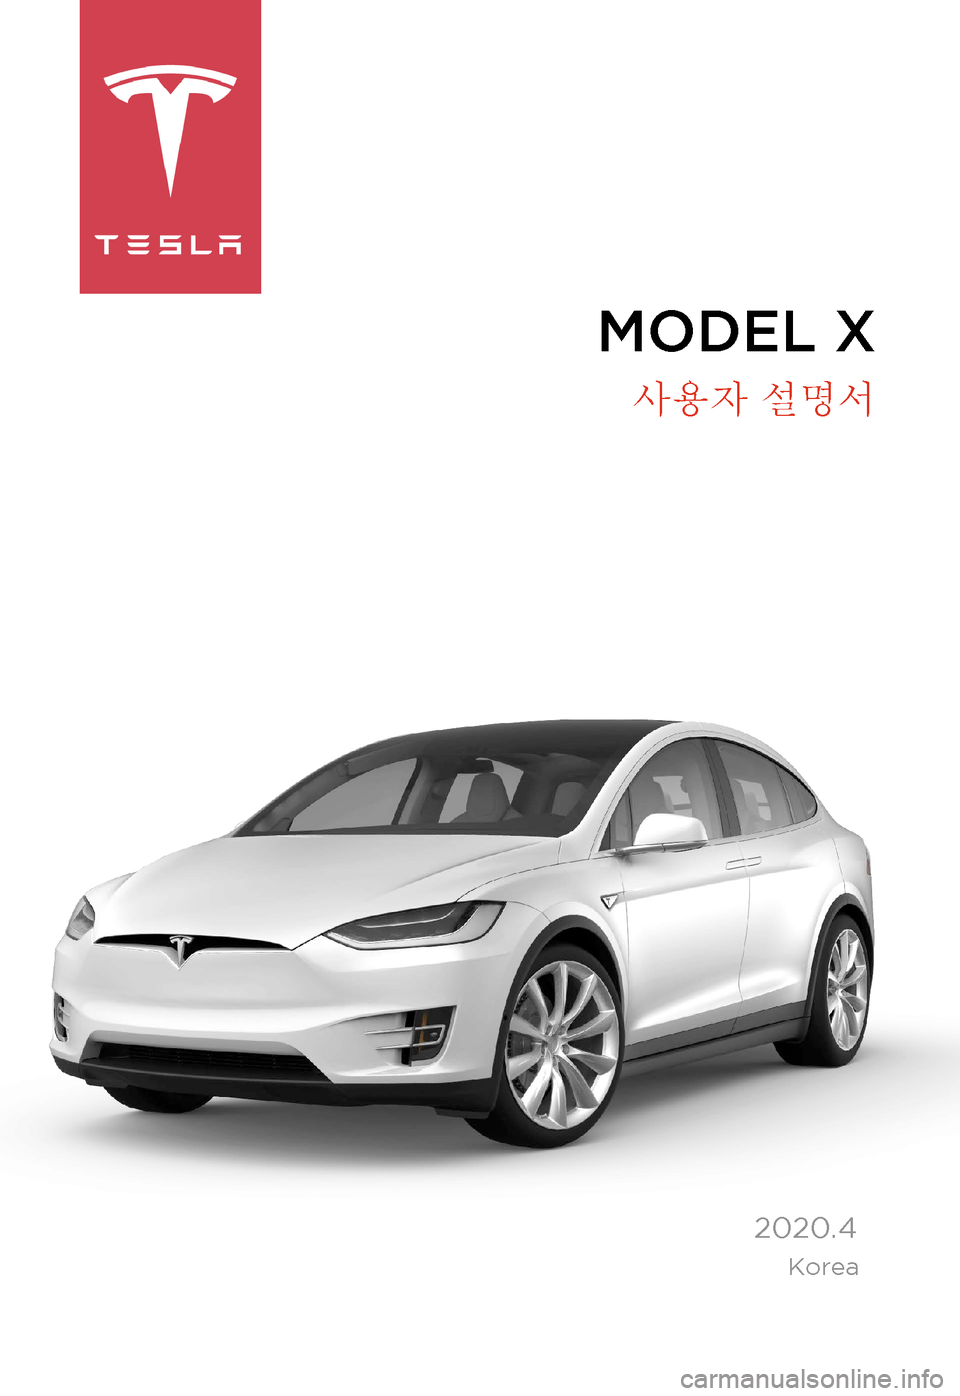 TESLA MODEL X 2020  사용자 가이드 (in Korean)  MODEL X

사용자 설명서
  2020.4
  Korea 